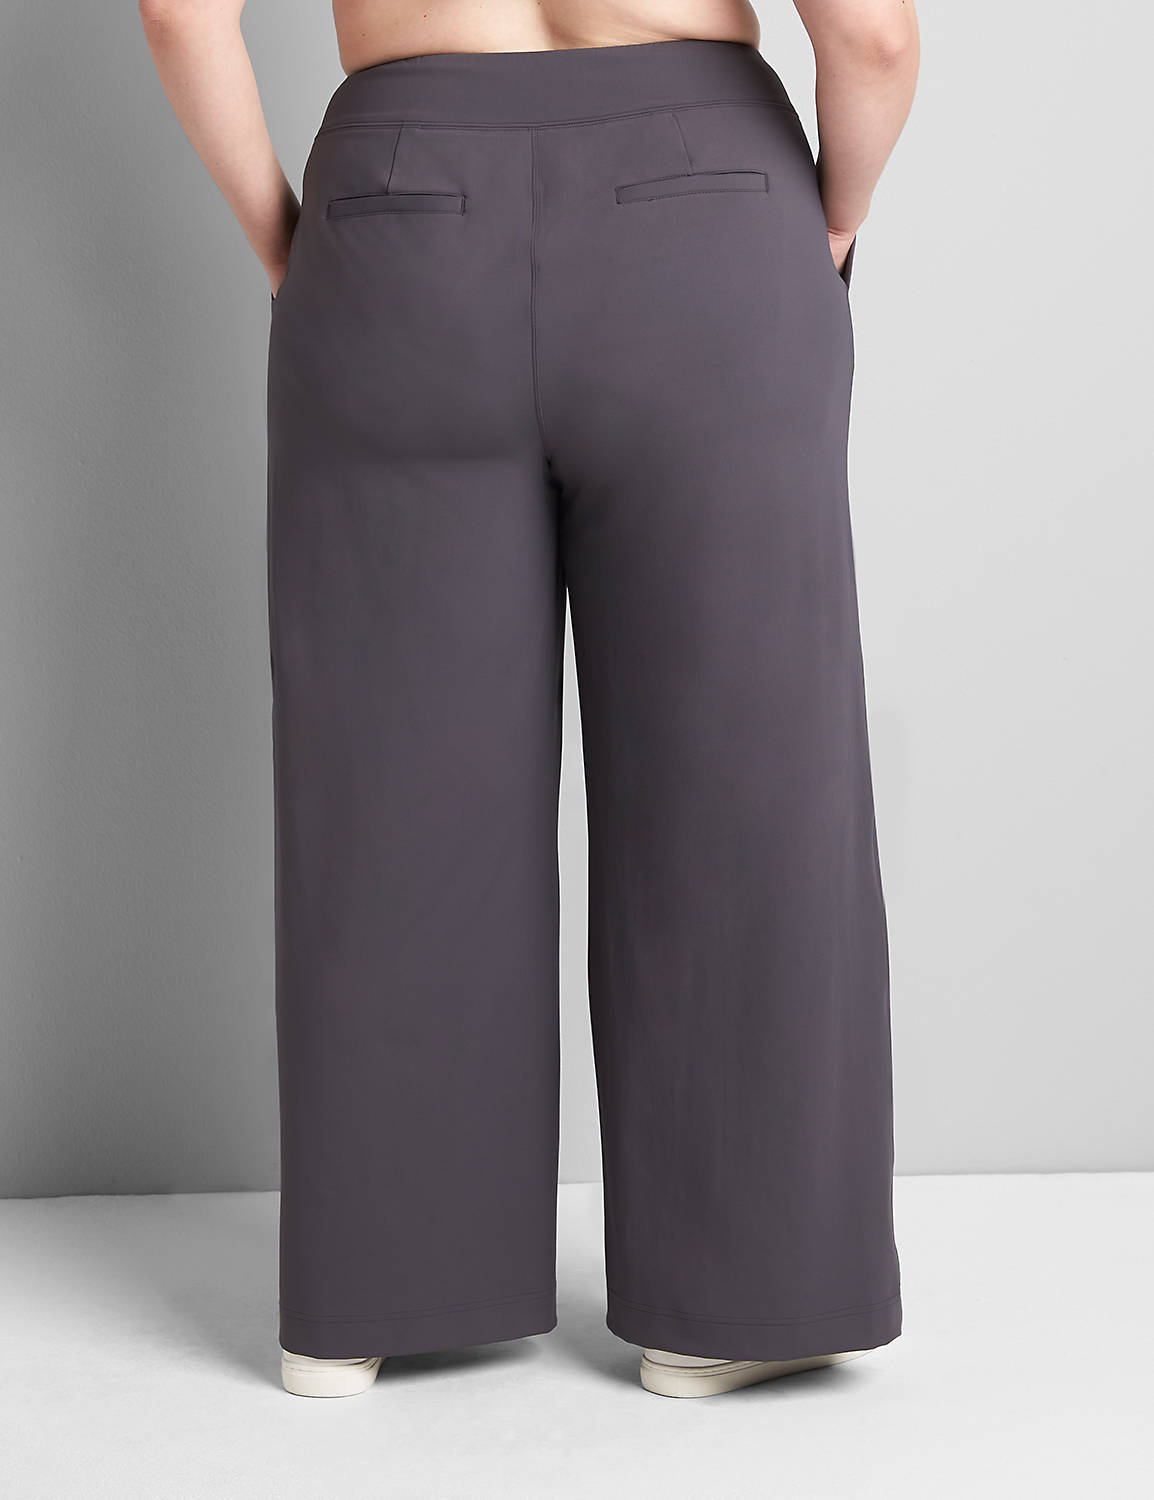 LIVI Wide-Leg Trouser Pant Product Image 2